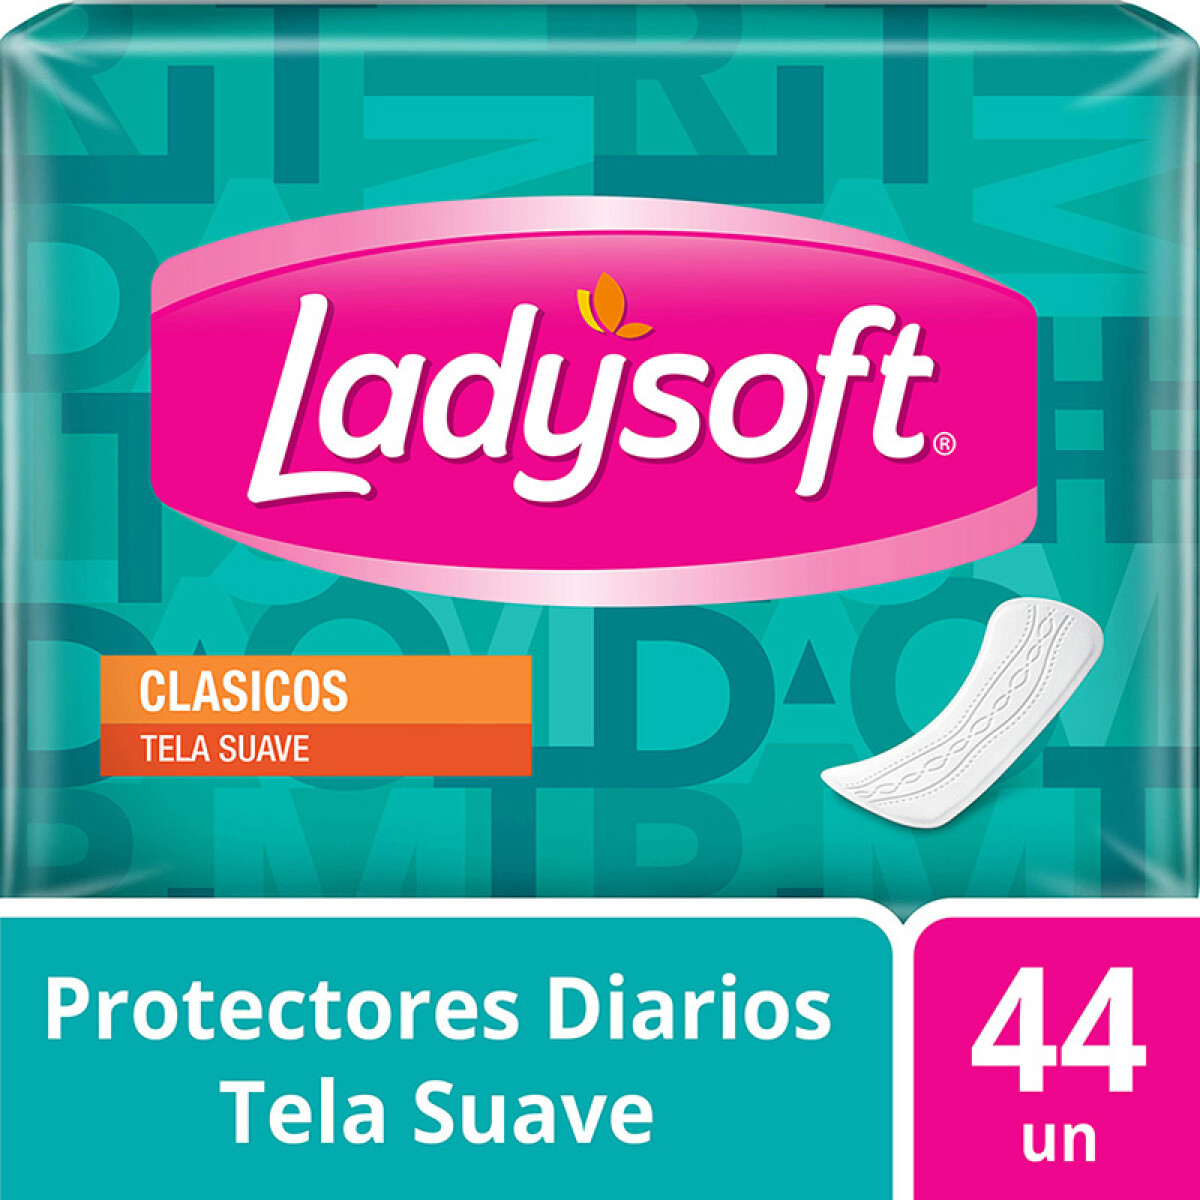 Ladysoft toalla - Protector clásico x44 